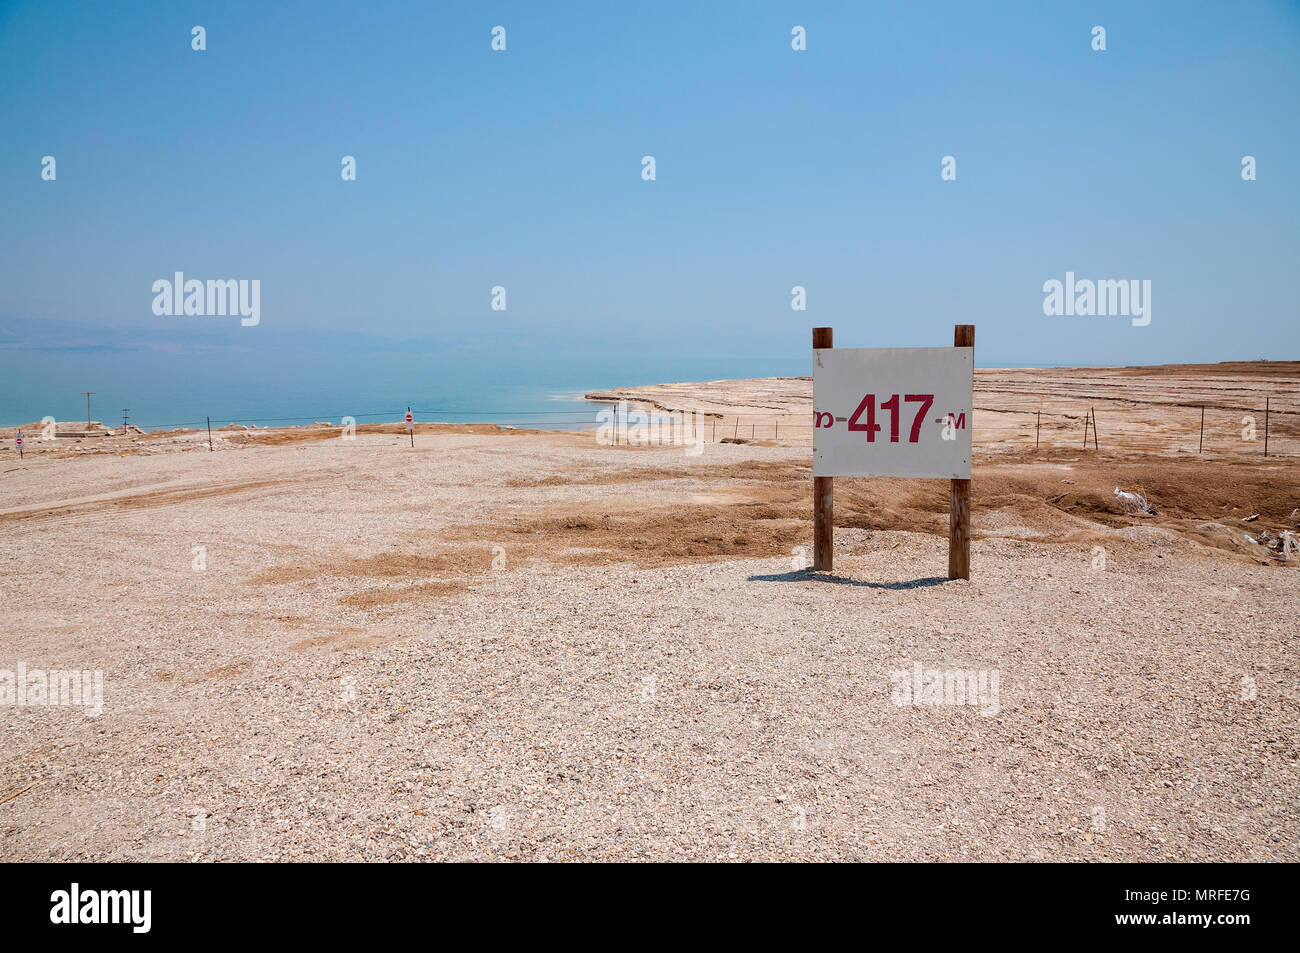 The Dead Sea, Israel Stock Photo